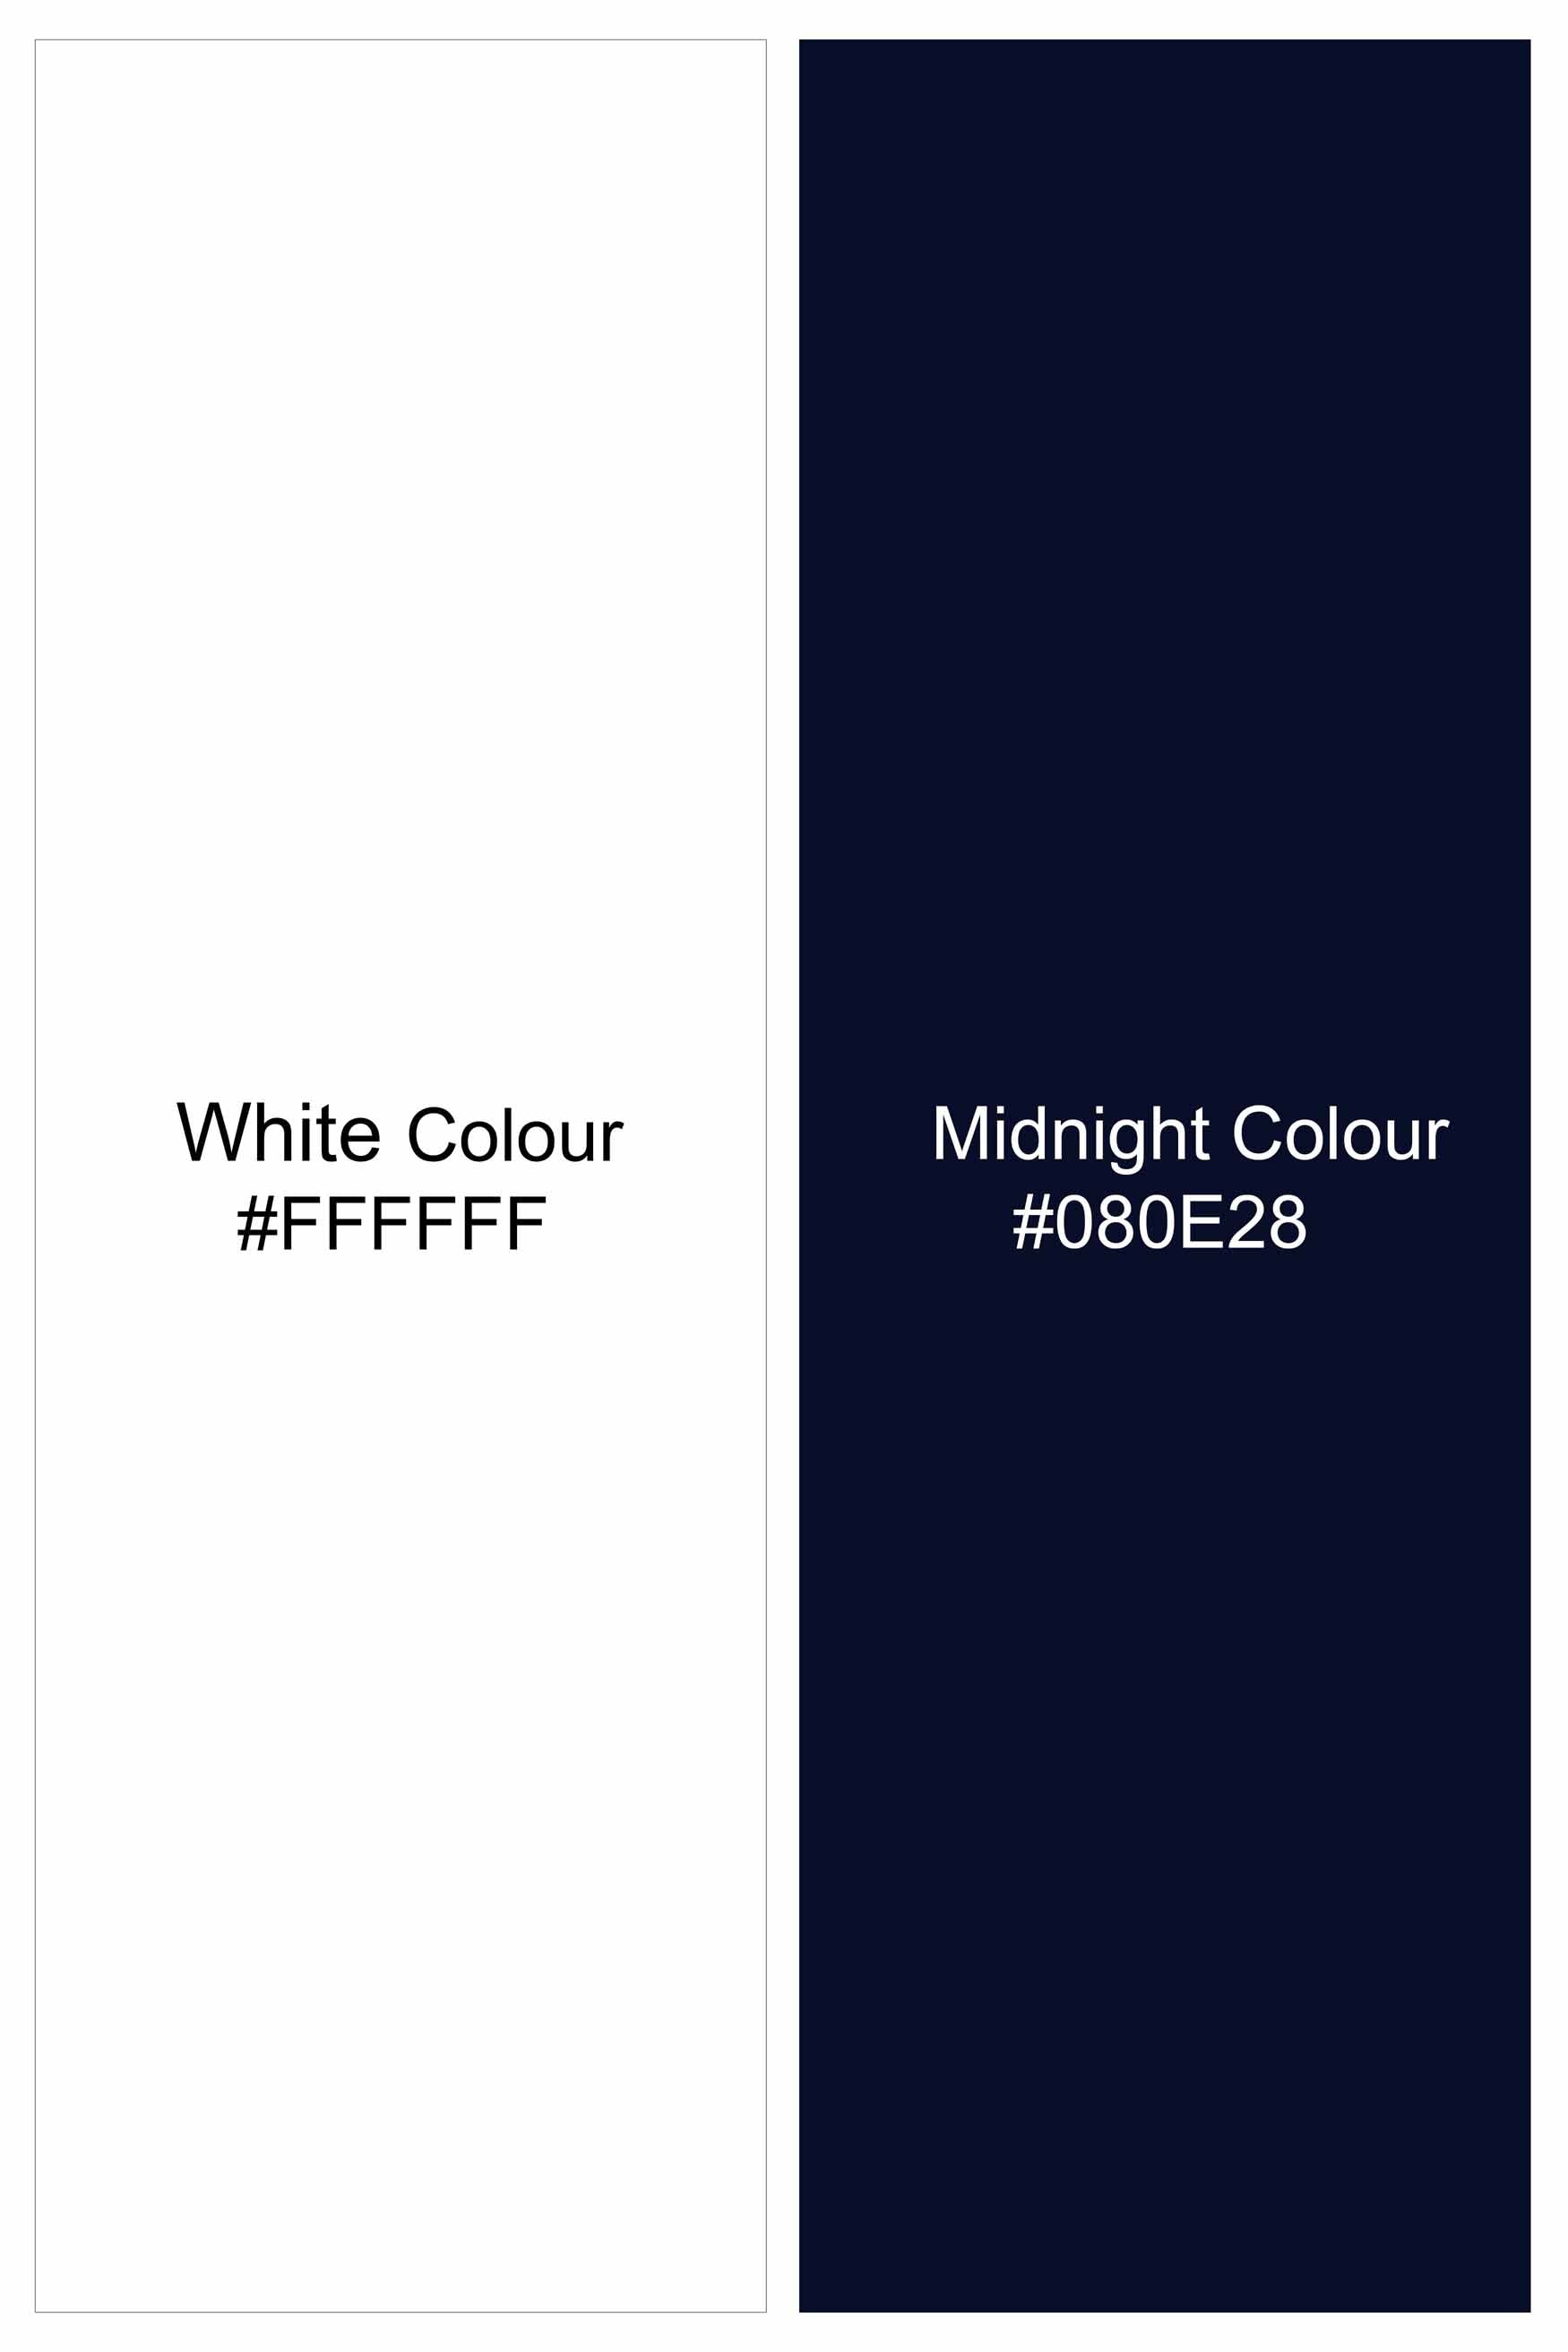 Bright White and Midnight Blue Tile Printed Subtle Sheen Super Soft Premium Cotton Shirt 11577-M-BLK-38, 11577-M-BLK-H-38, 11577-M-BLK-39, 11577-M-BLK-H-39, 11577-M-BLK-40, 11577-M-BLK-H-40, 11577-M-BLK-42, 11577-M-BLK-H-42, 11577-M-BLK-44, 11577-M-BLK-H-44, 11577-M-BLK-46, 11577-M-BLK-H-46, 11577-M-BLK-48, 11577-M-BLK-H-48, 11577-M-BLK-50, 11577-M-BLK-H-50, 11577-M-BLK-52, 11577-M-BLK-H-52